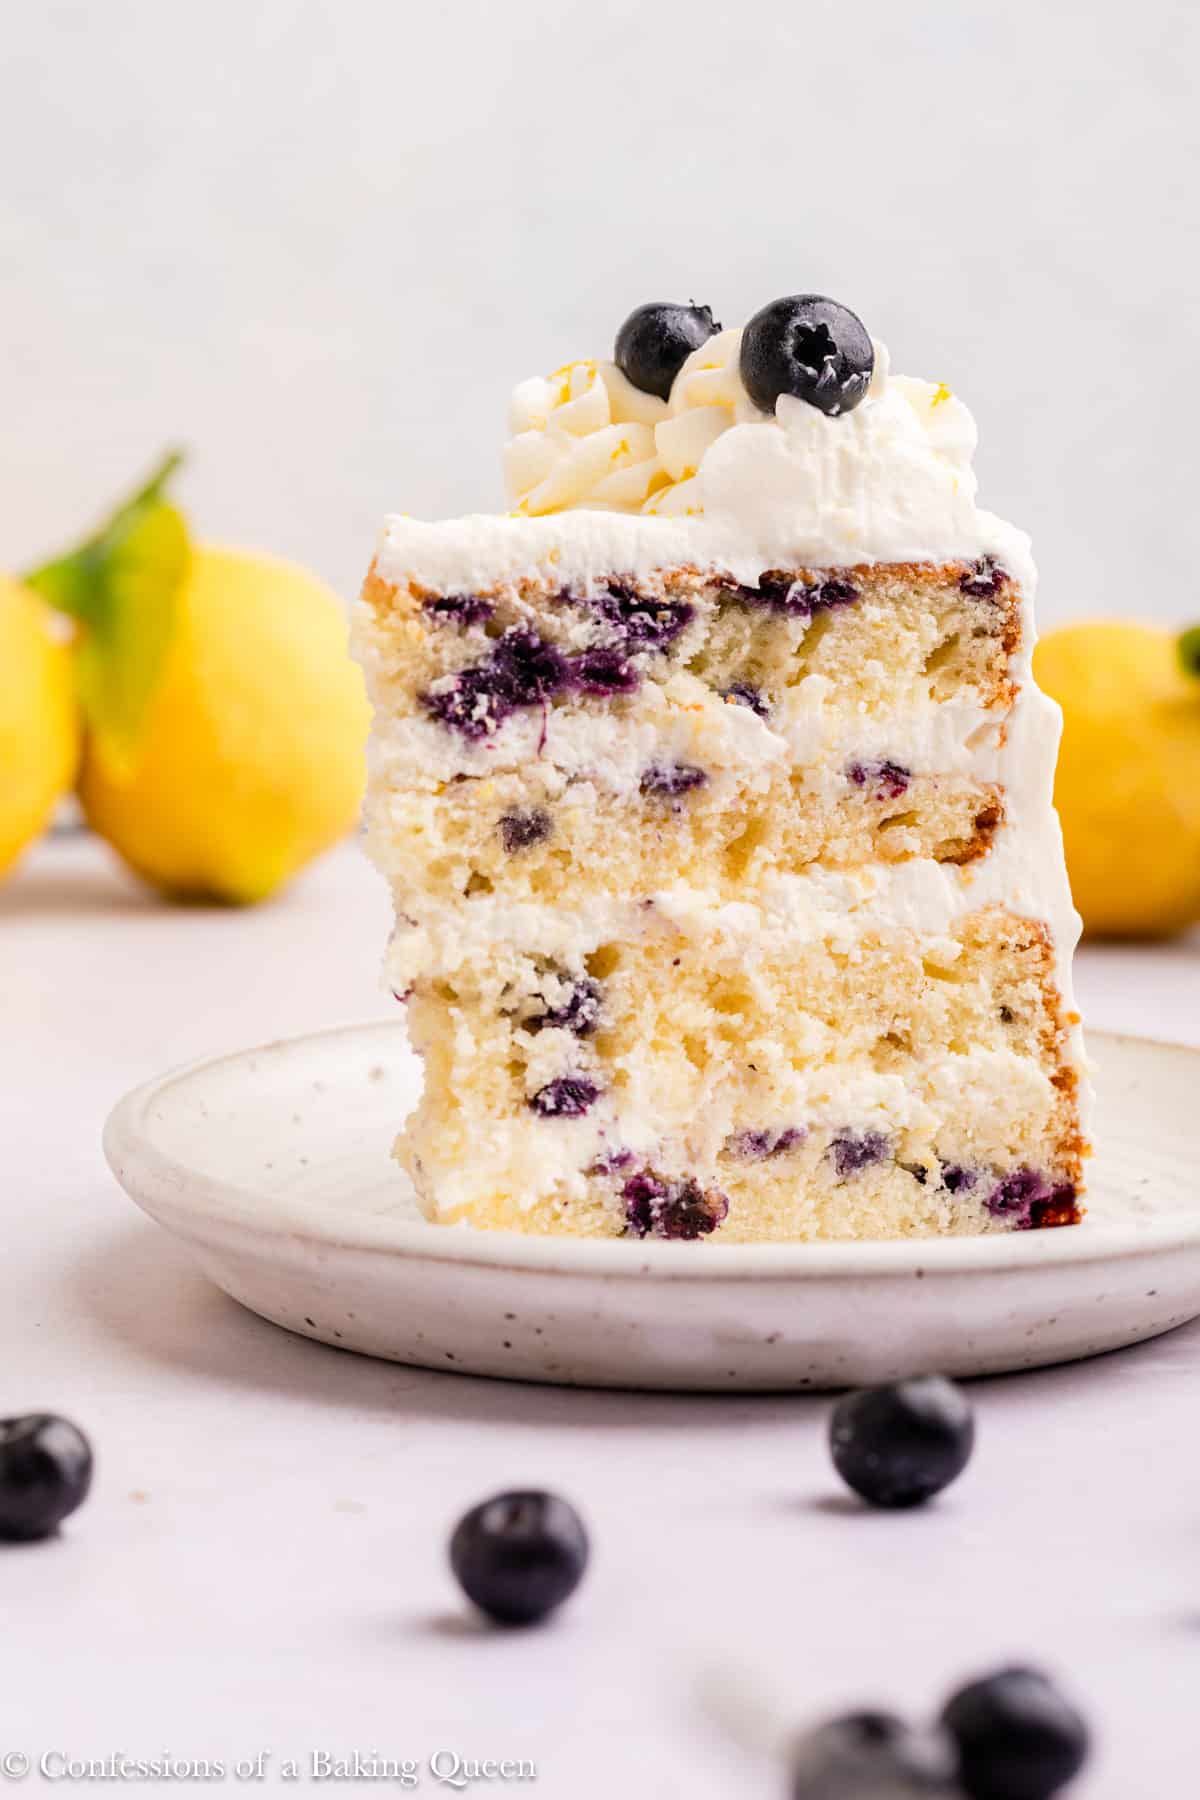 slice of lemon blueberry cream cake on a white plate on a light surface